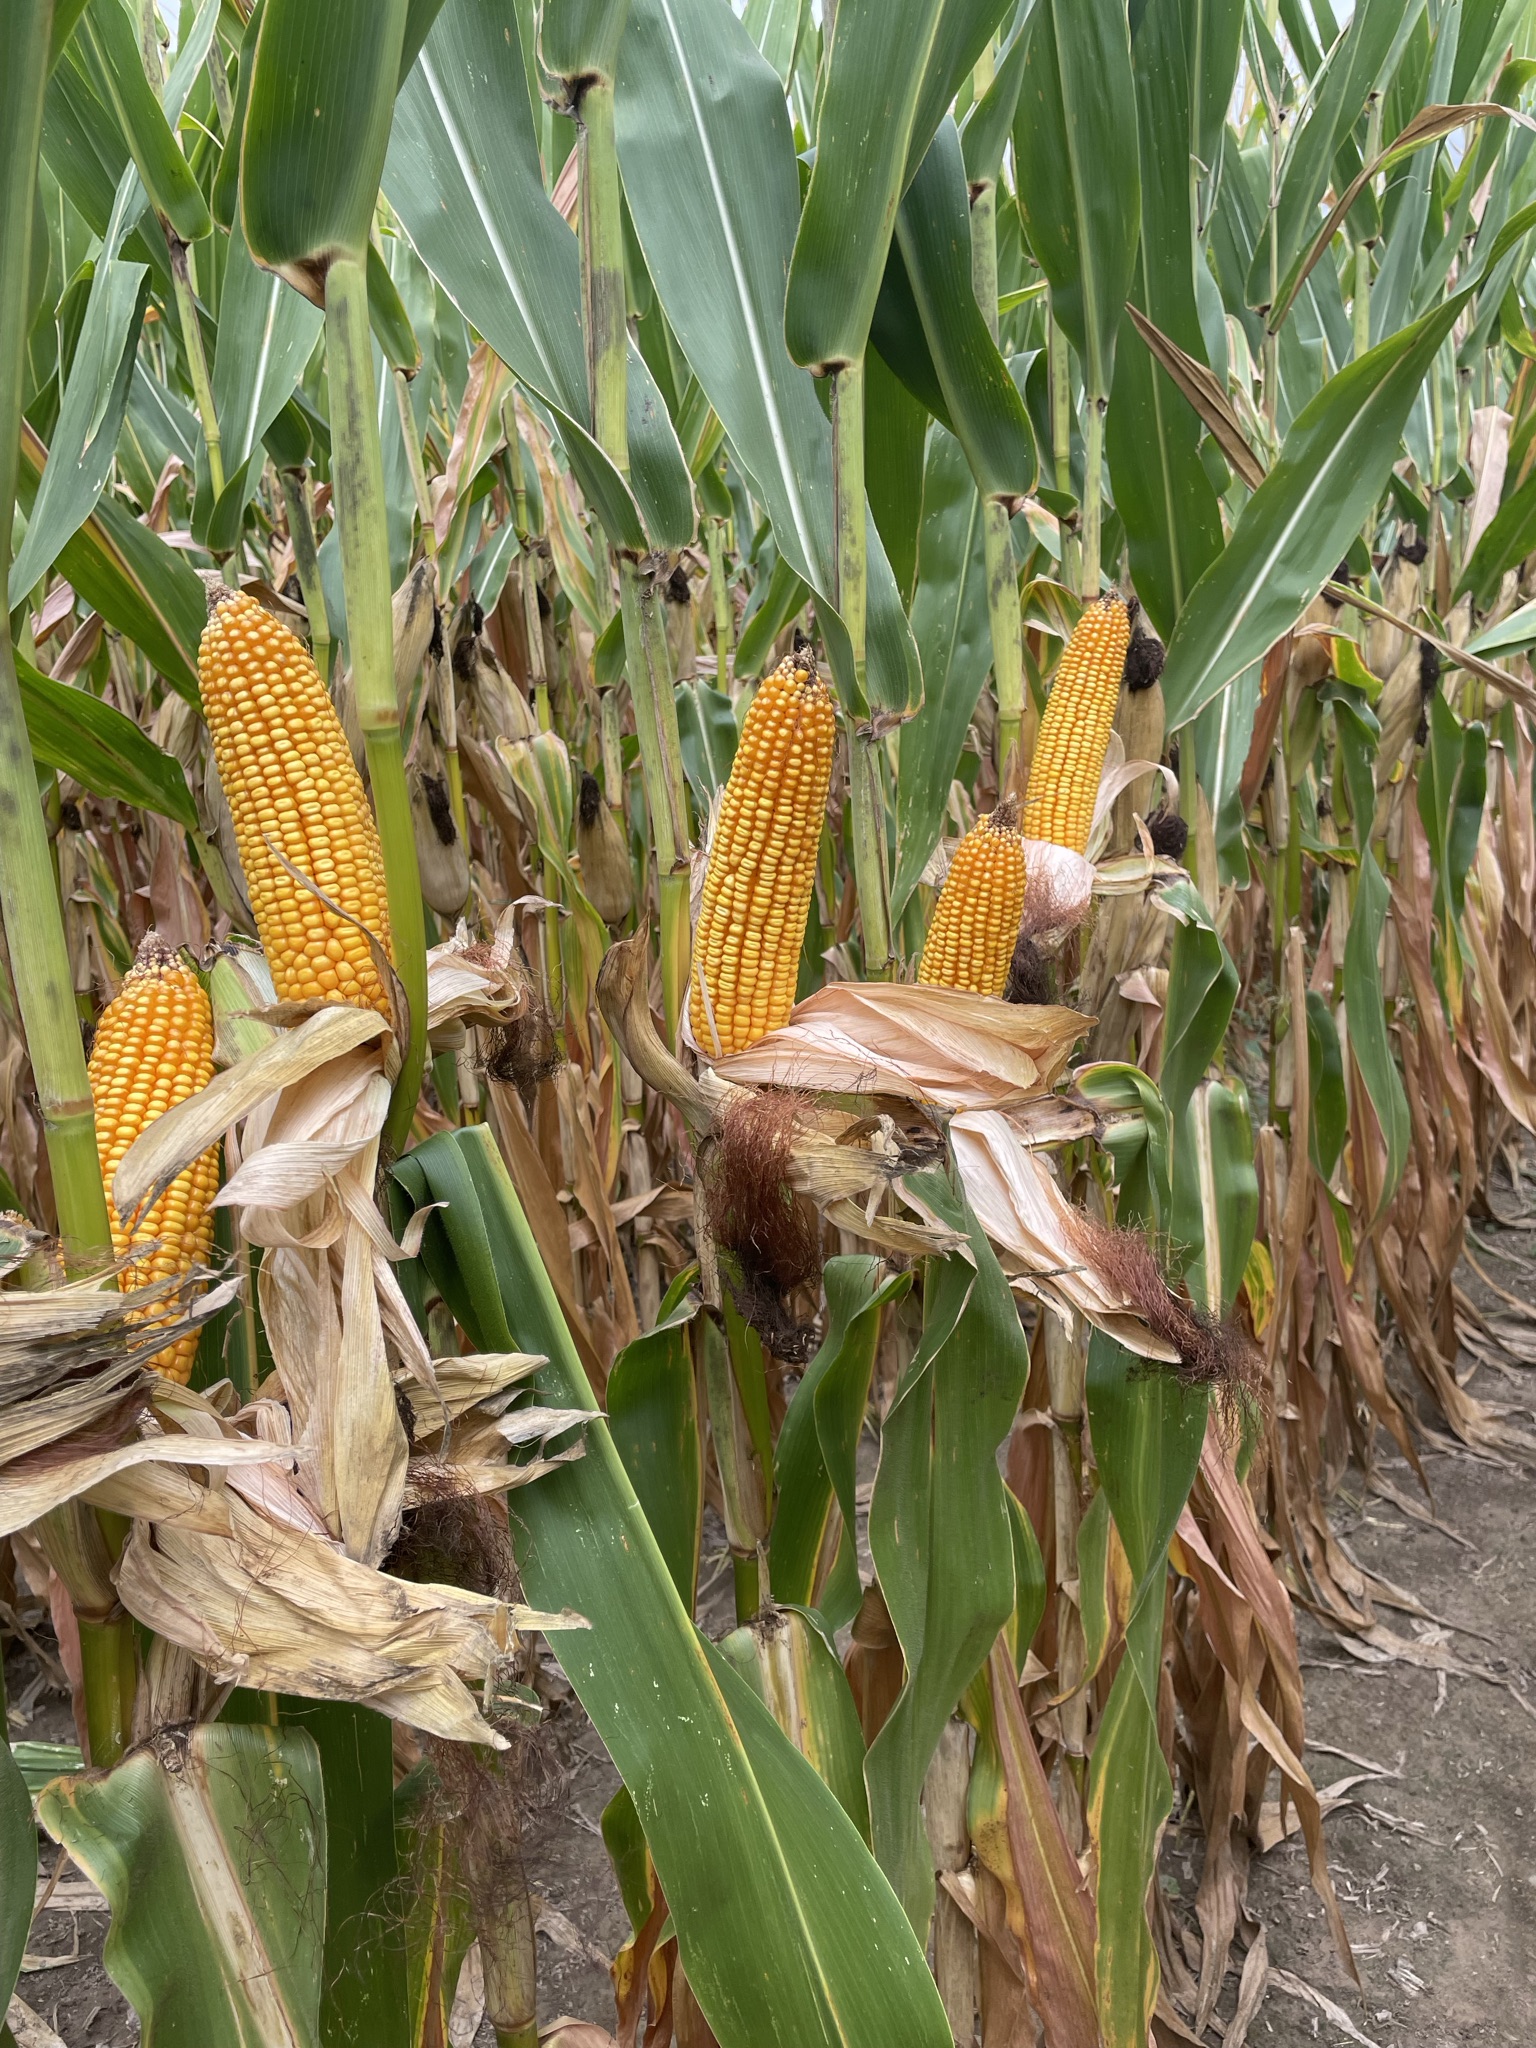 LG68C18 corn plants